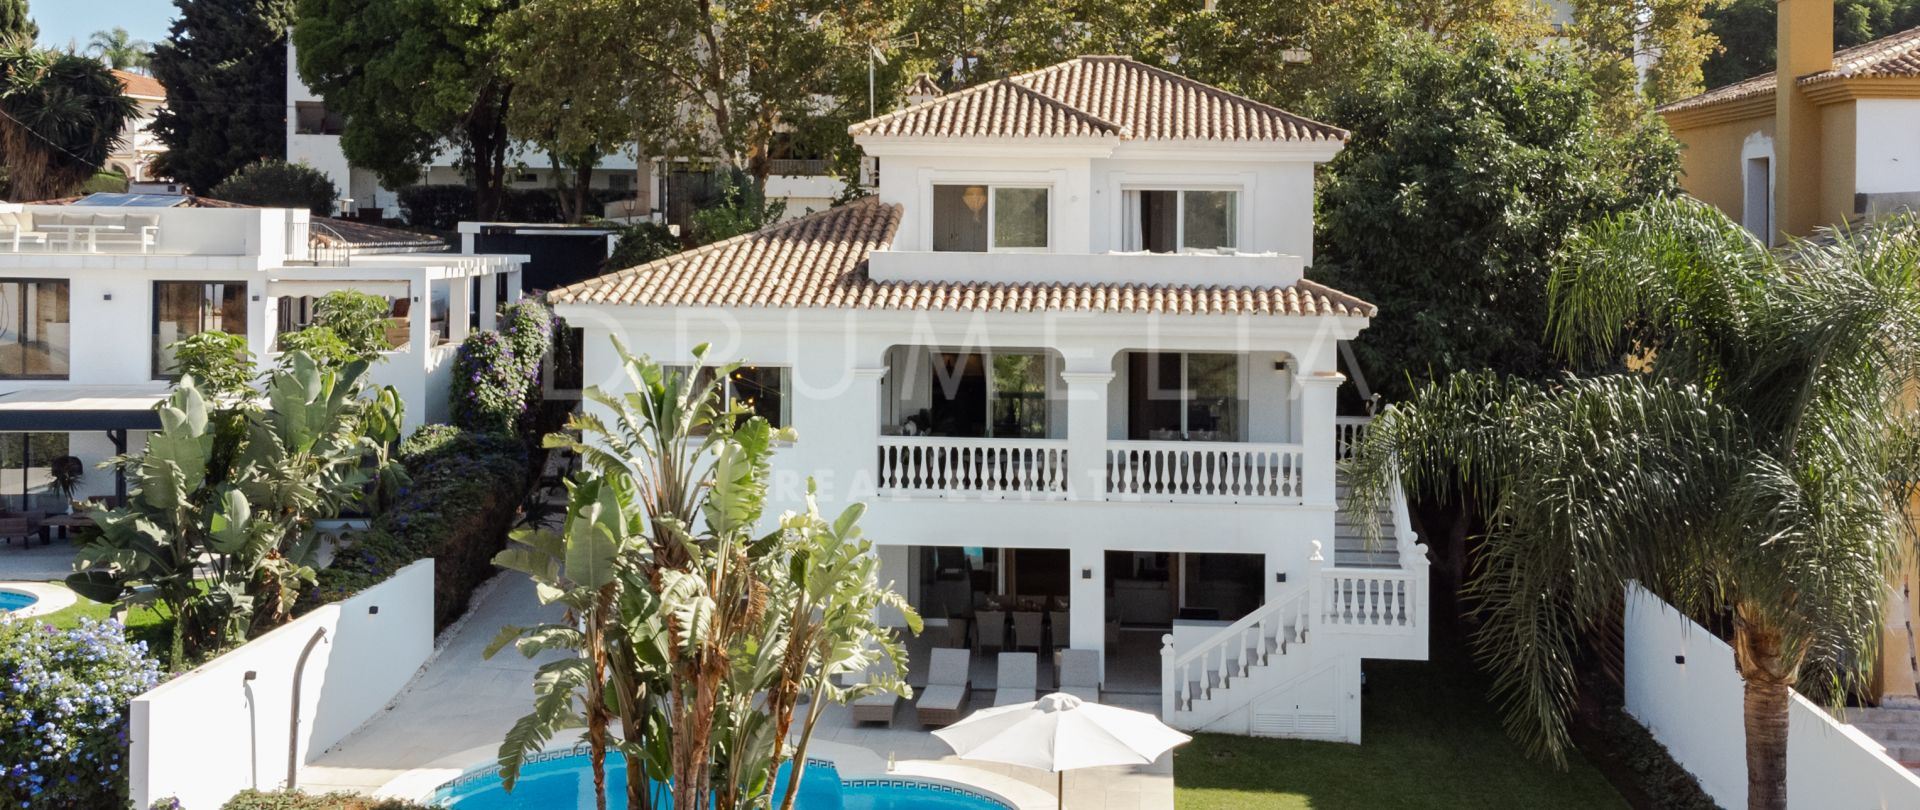 Fantastic Mediterranean villa with modern Scandinavian design for sale in Nueva Andalucia Marbella.